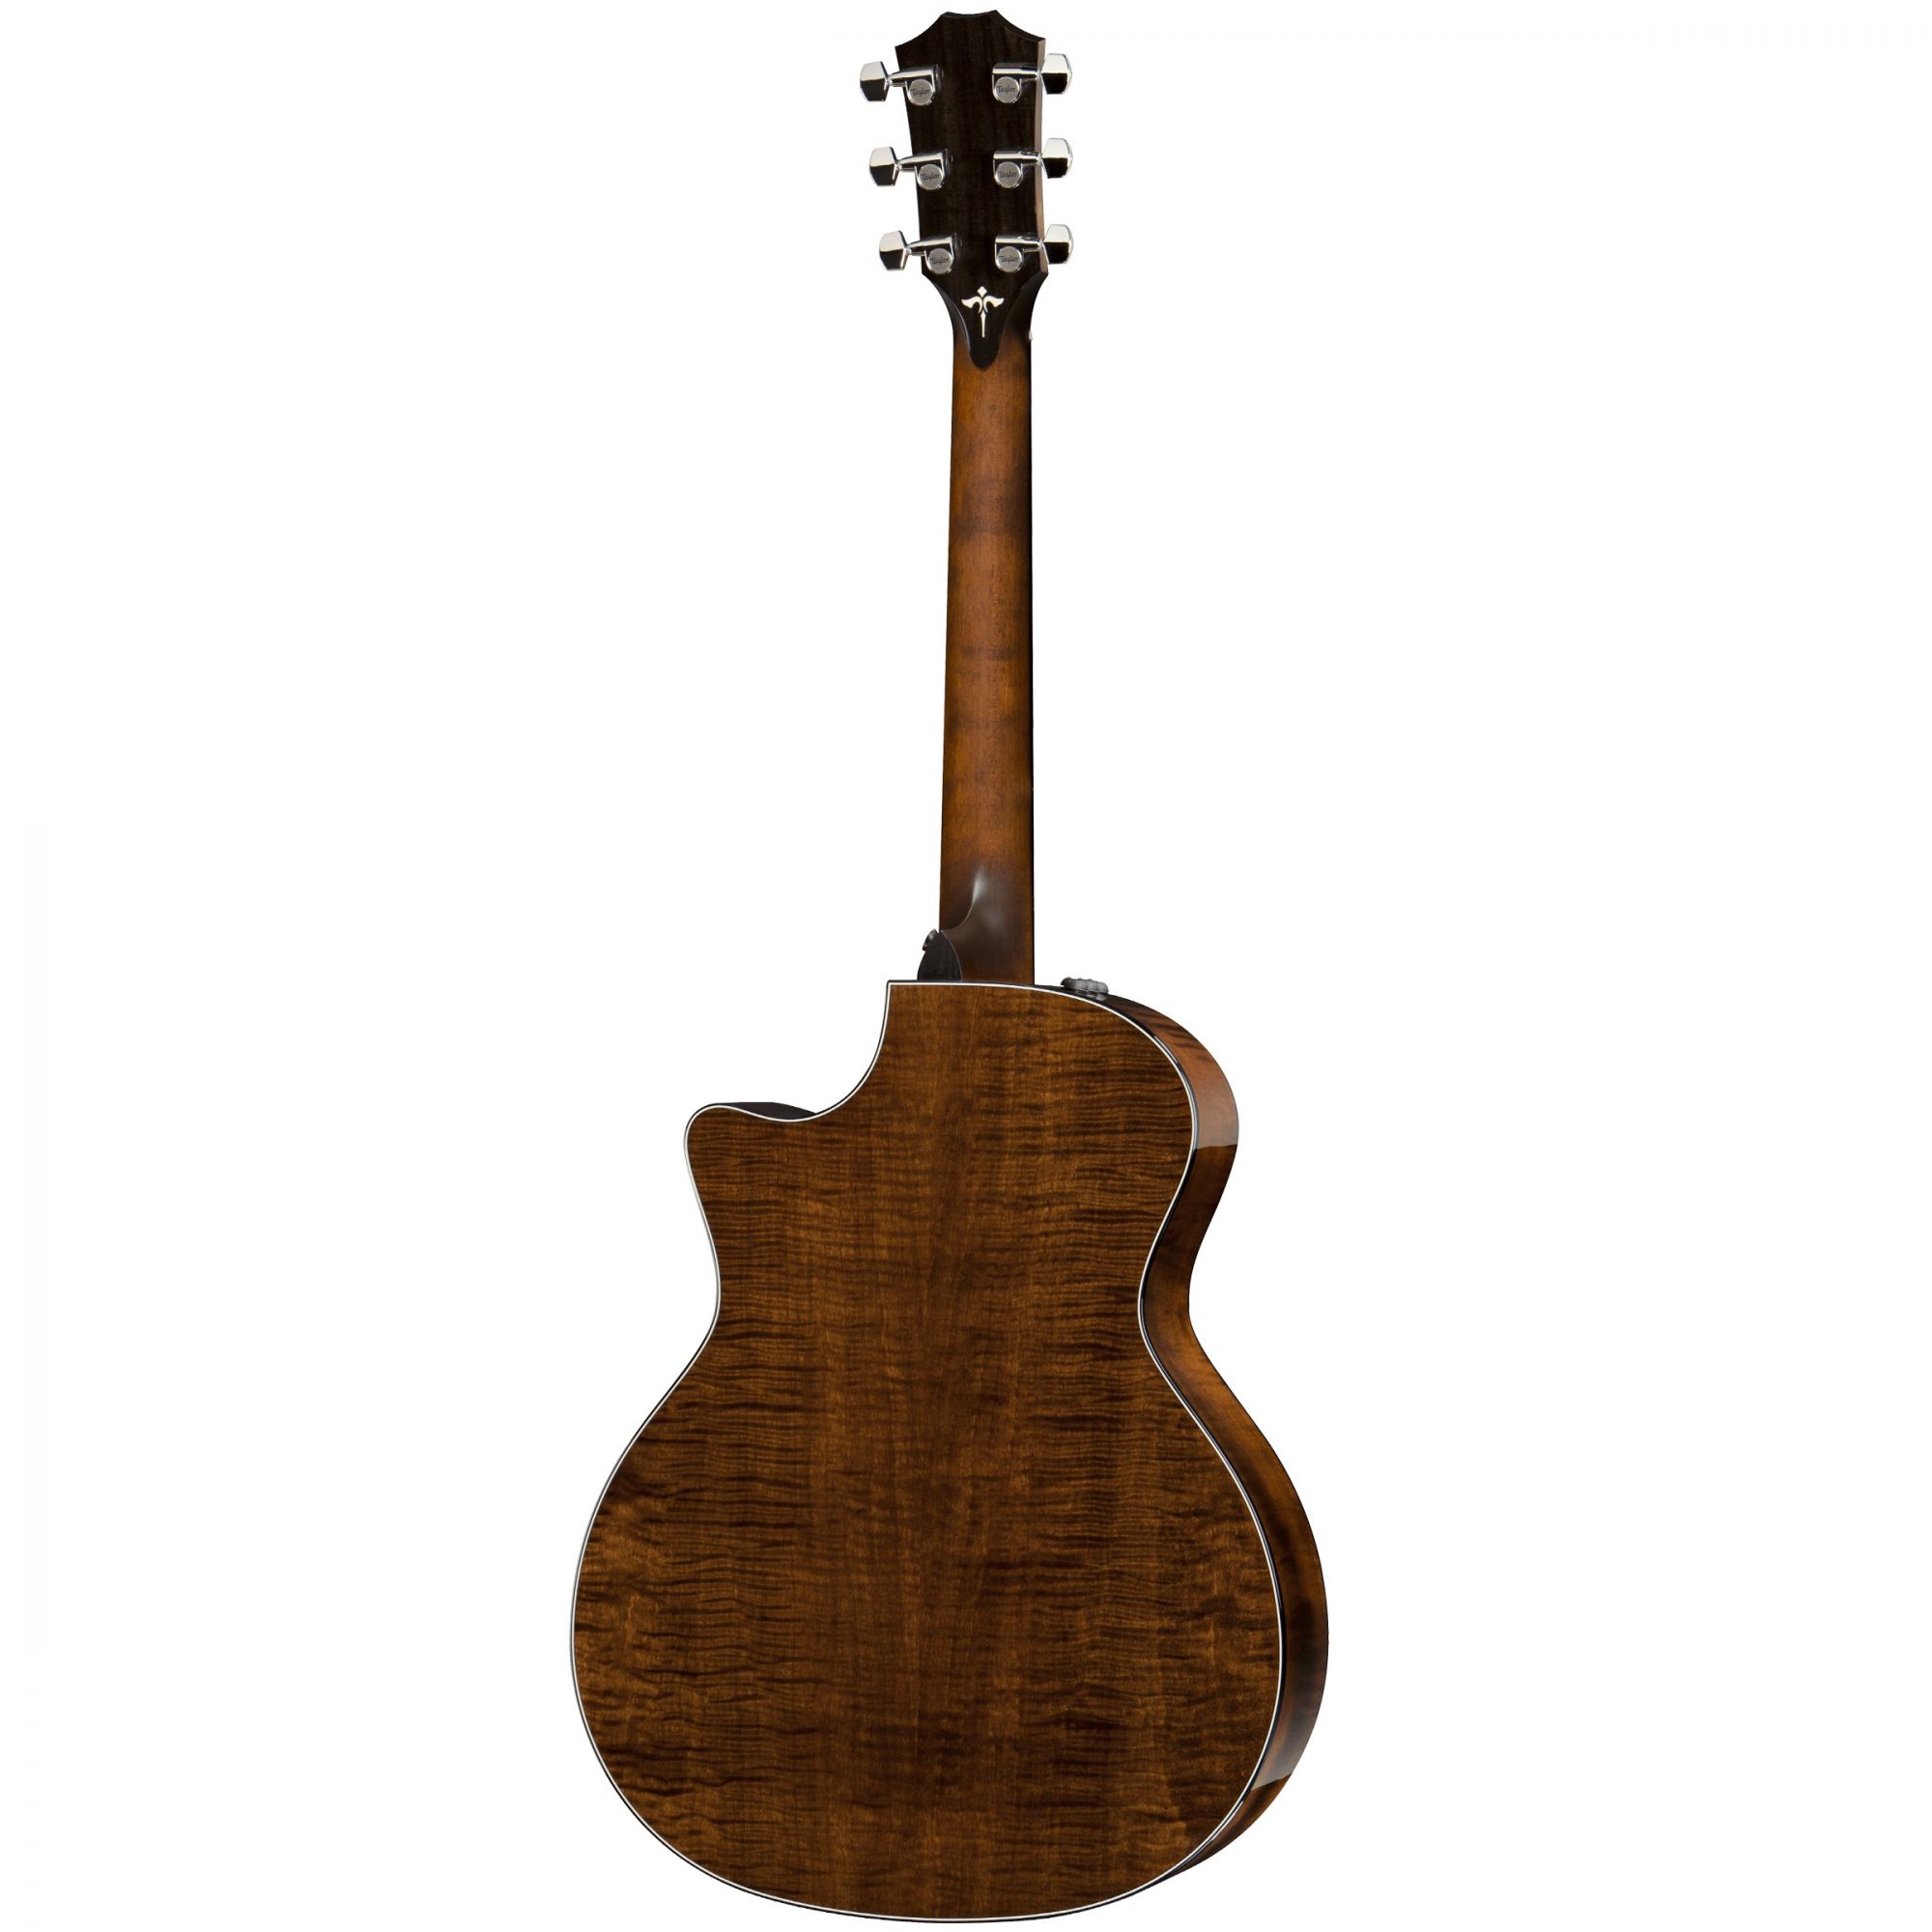 Taylor 614ce Electro Acoustic Guitar